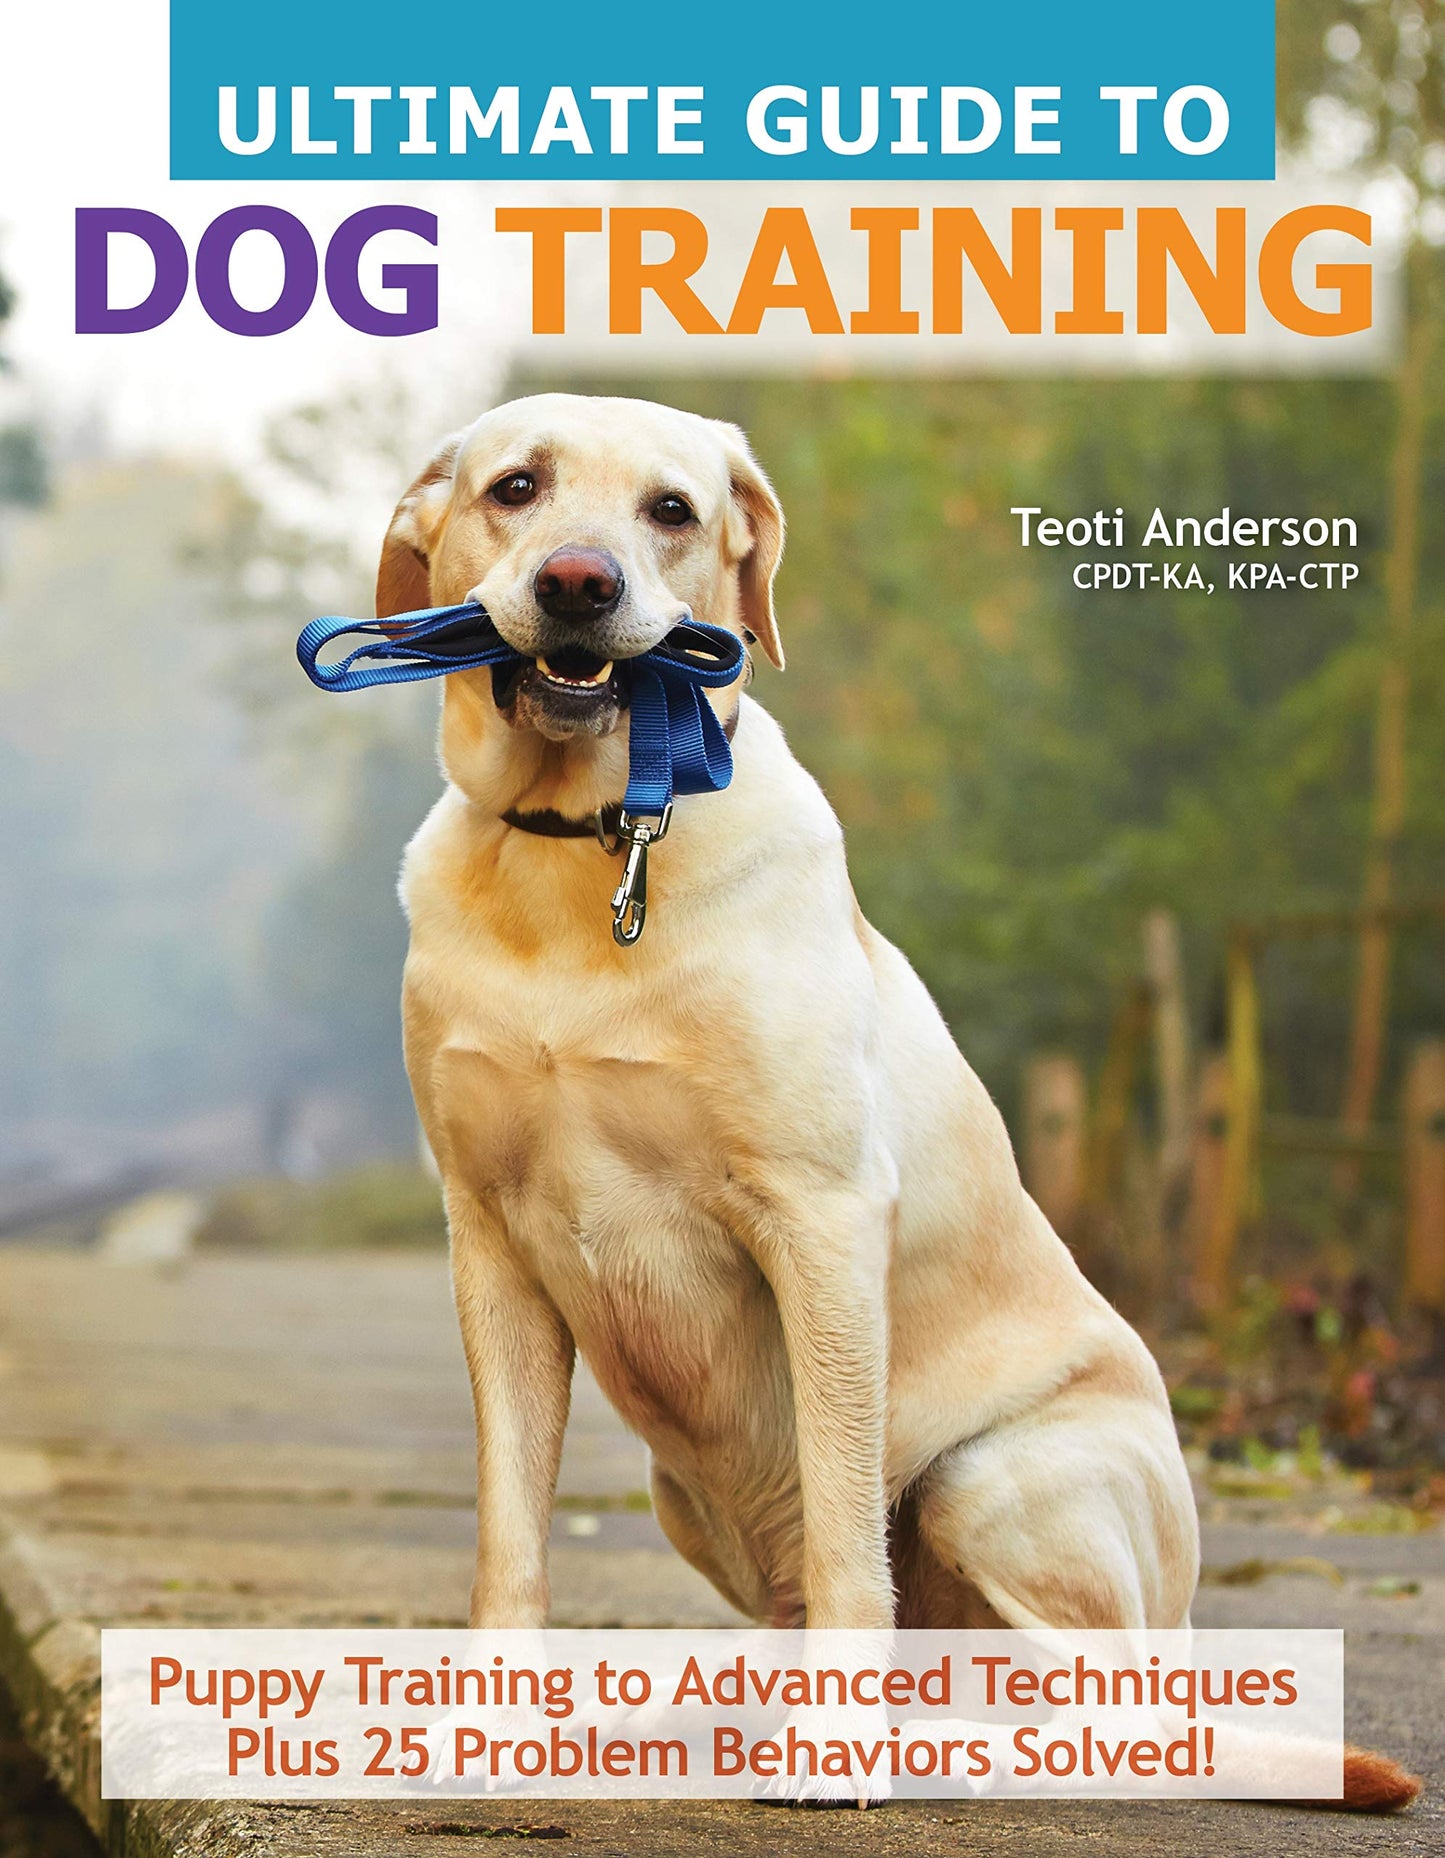 Book - Dog Training